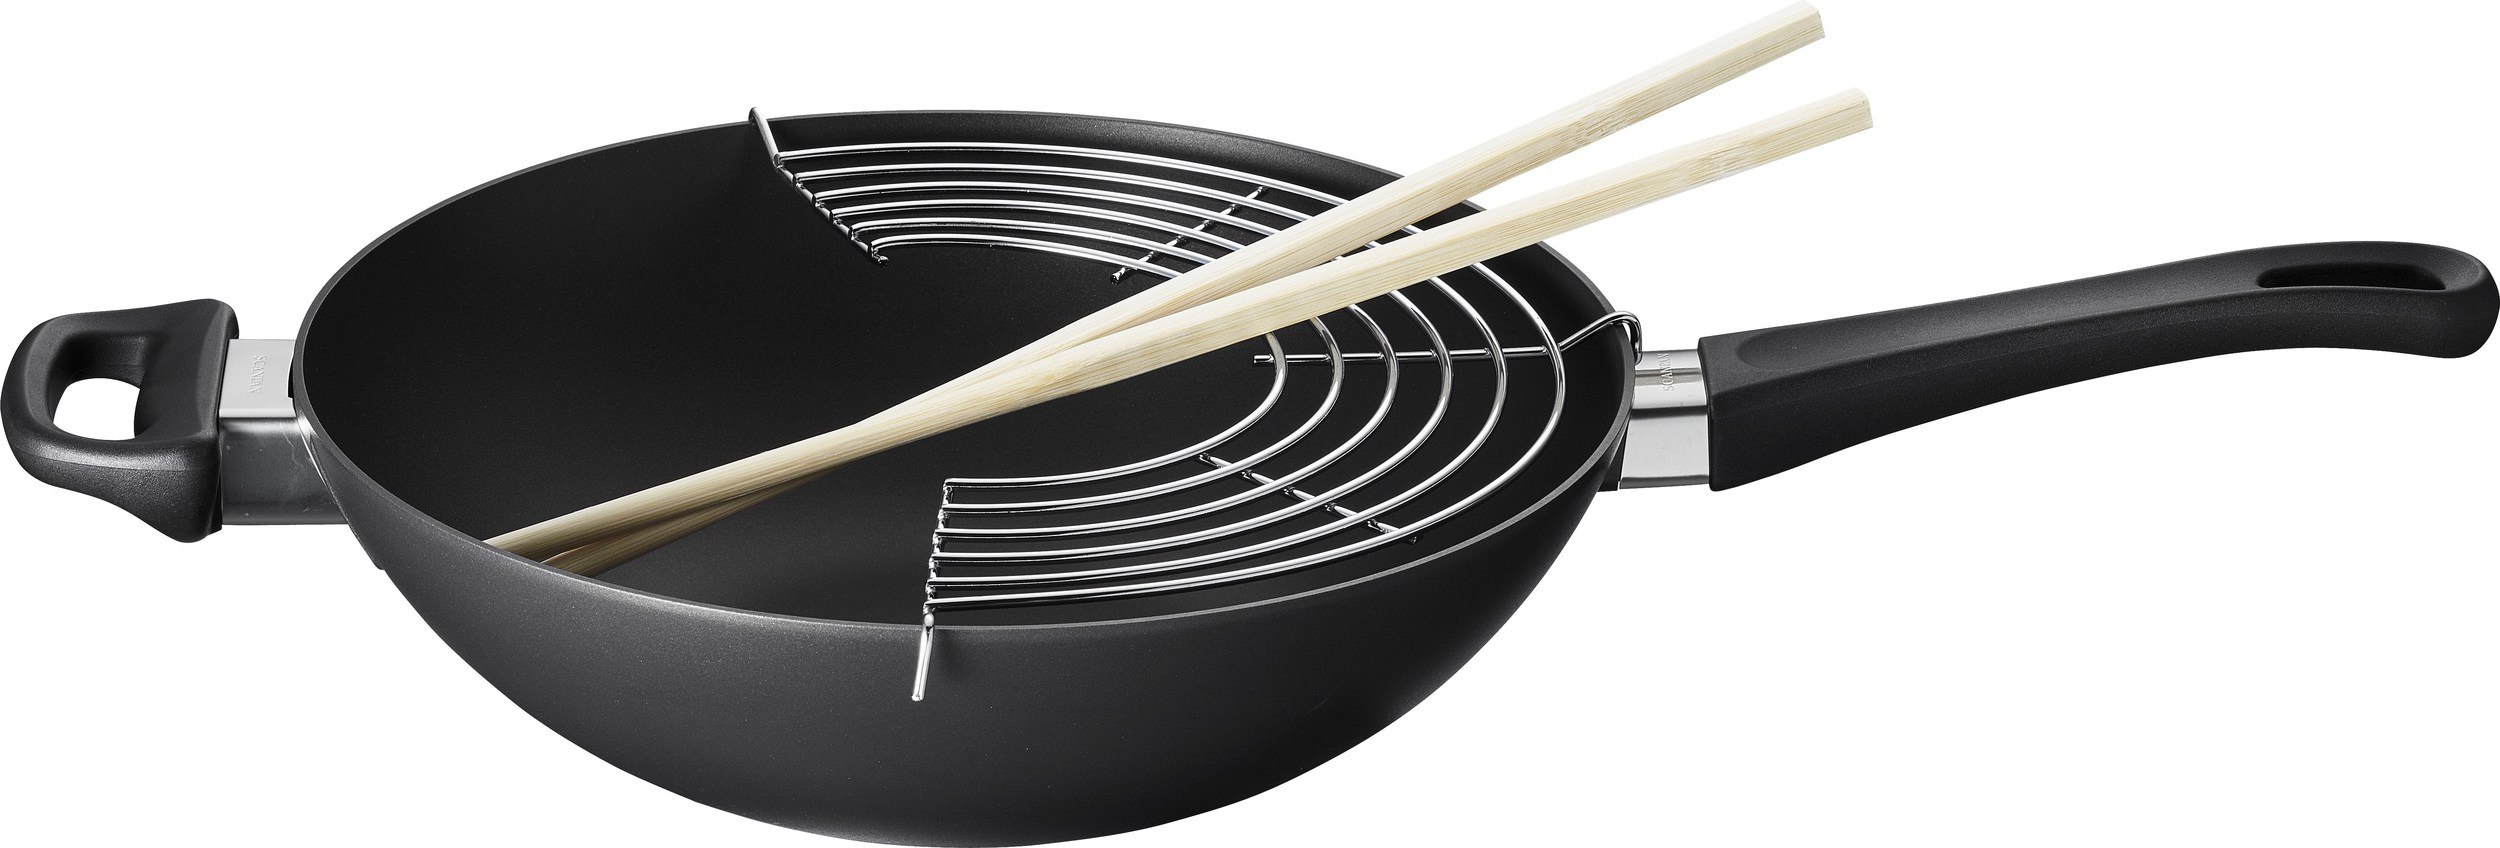 https://3fa-media.com/scanpan/scanpan-classic-wok-with-grill-and-chopsticks__65663_1710be2-s2500x2500.jpg